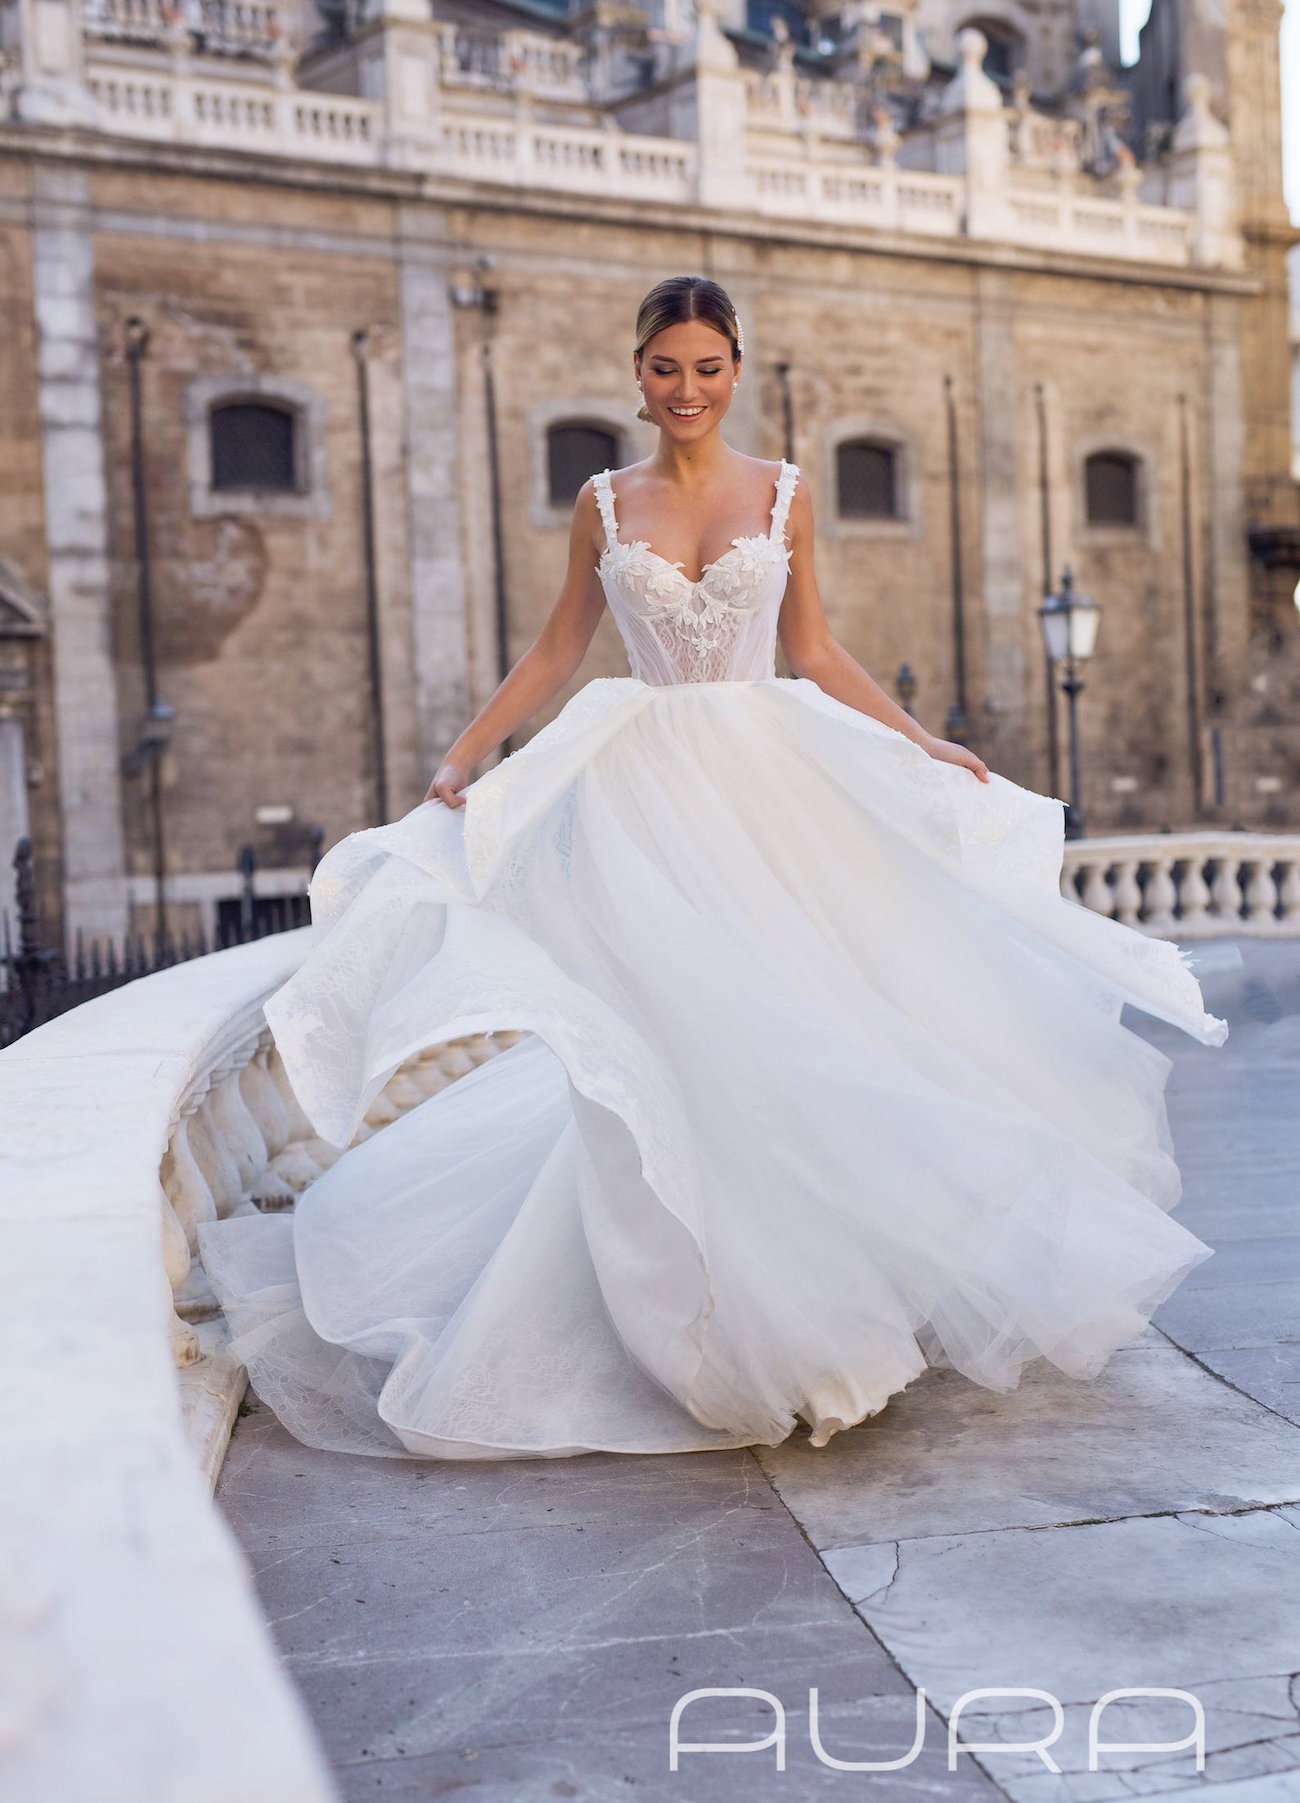 20 Fairytale Princess Ballgown Wedding Dresses from